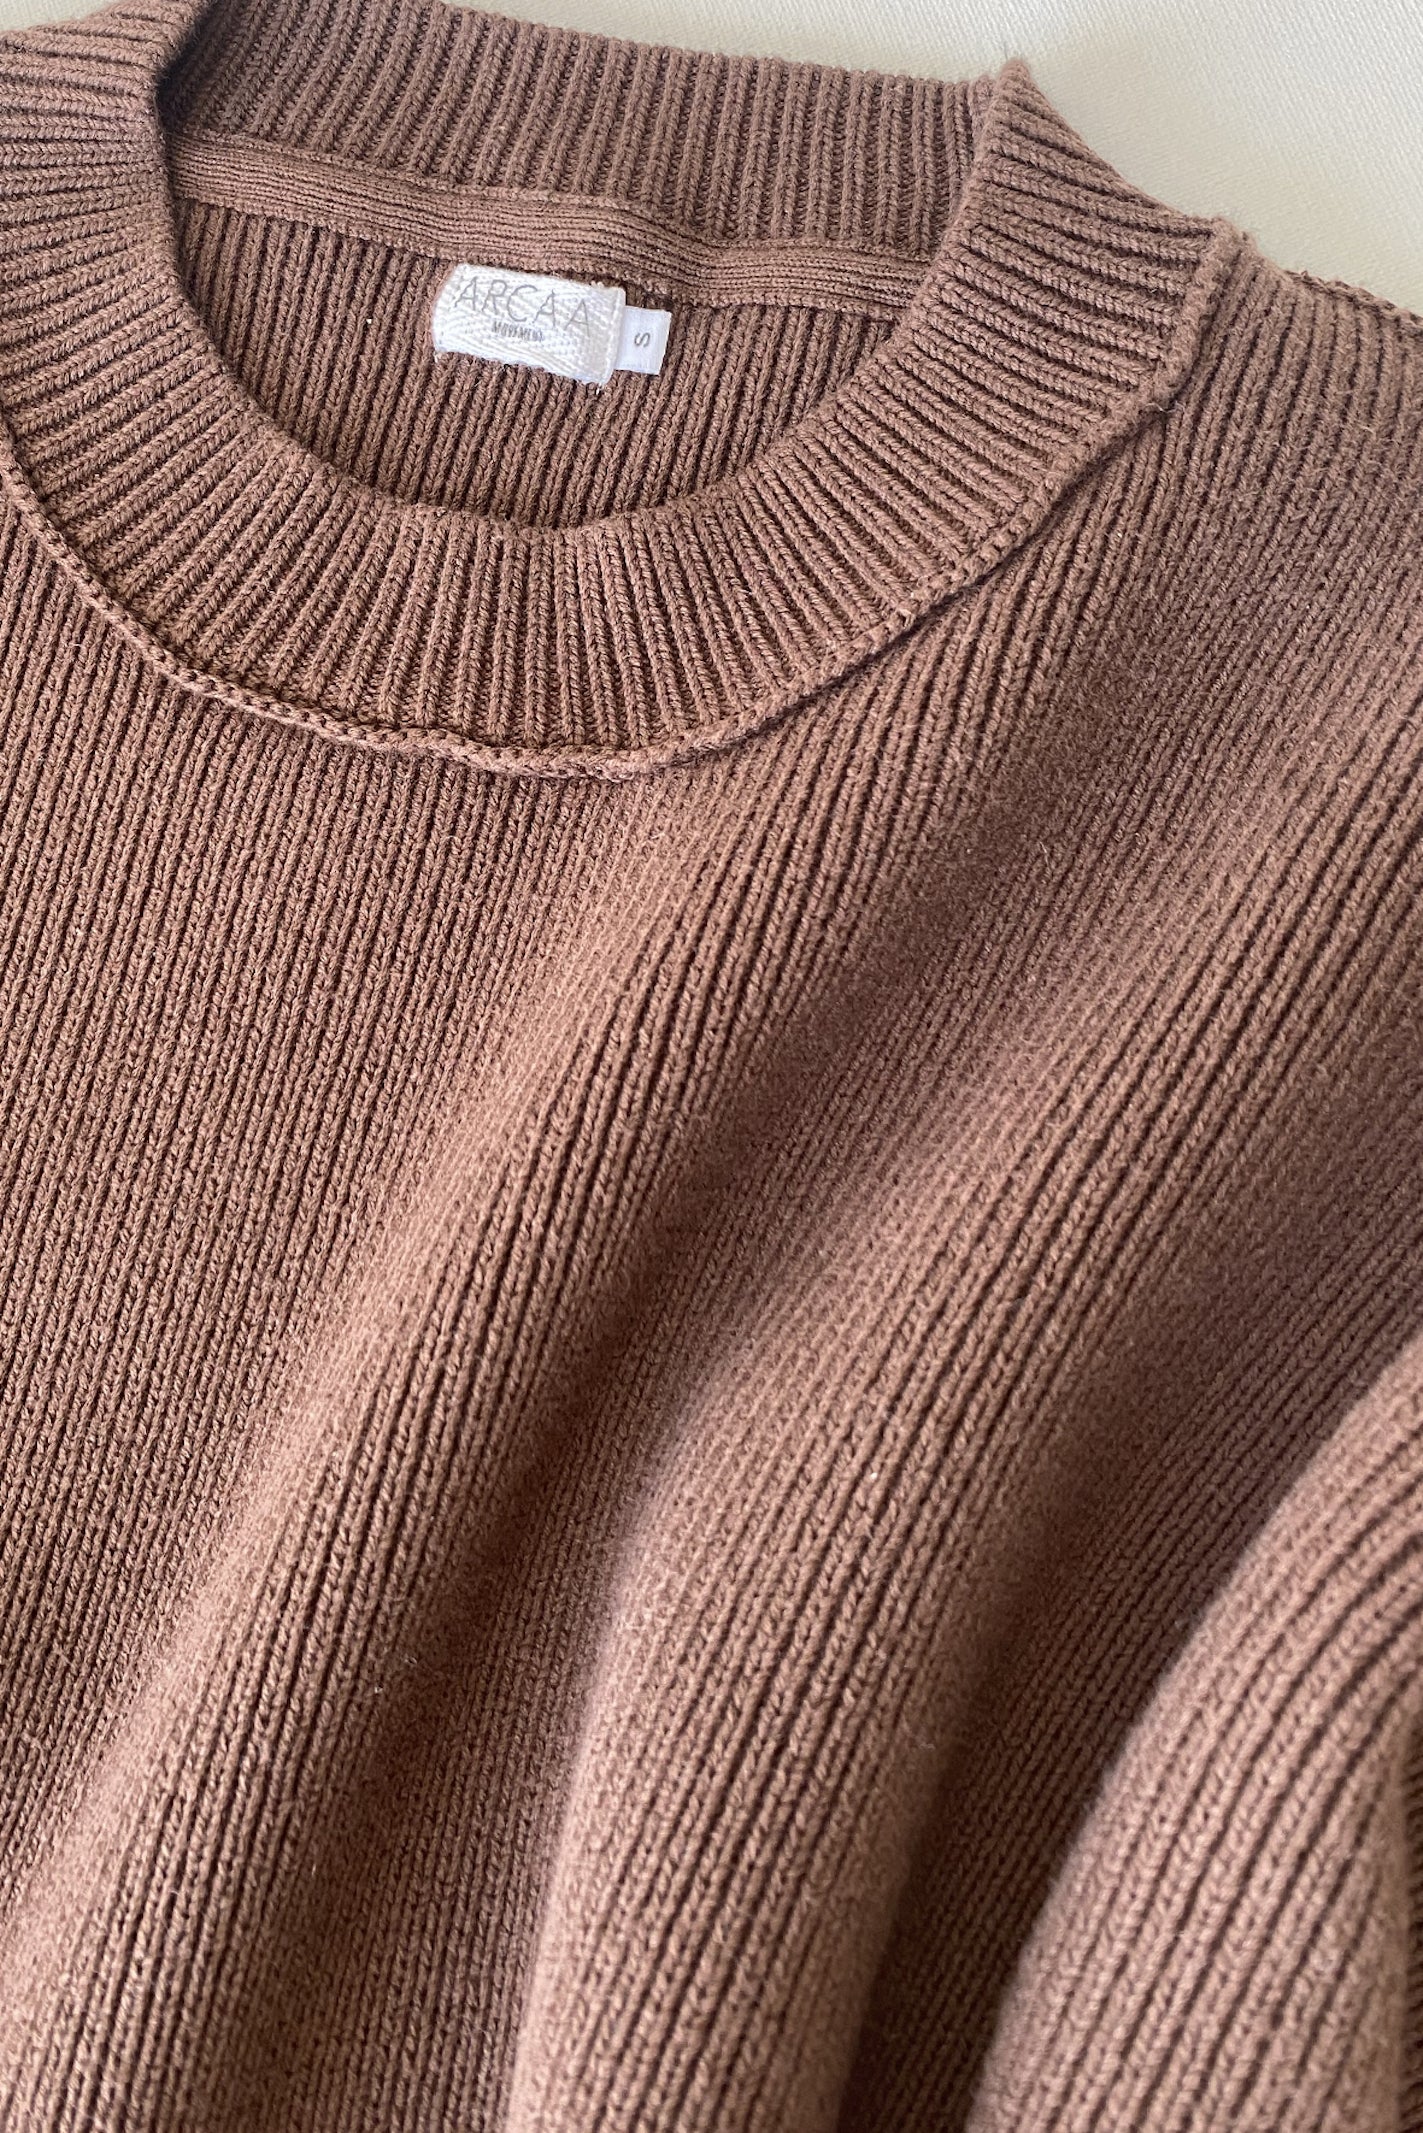 Harper Organic Knit Sweater // Chocolate